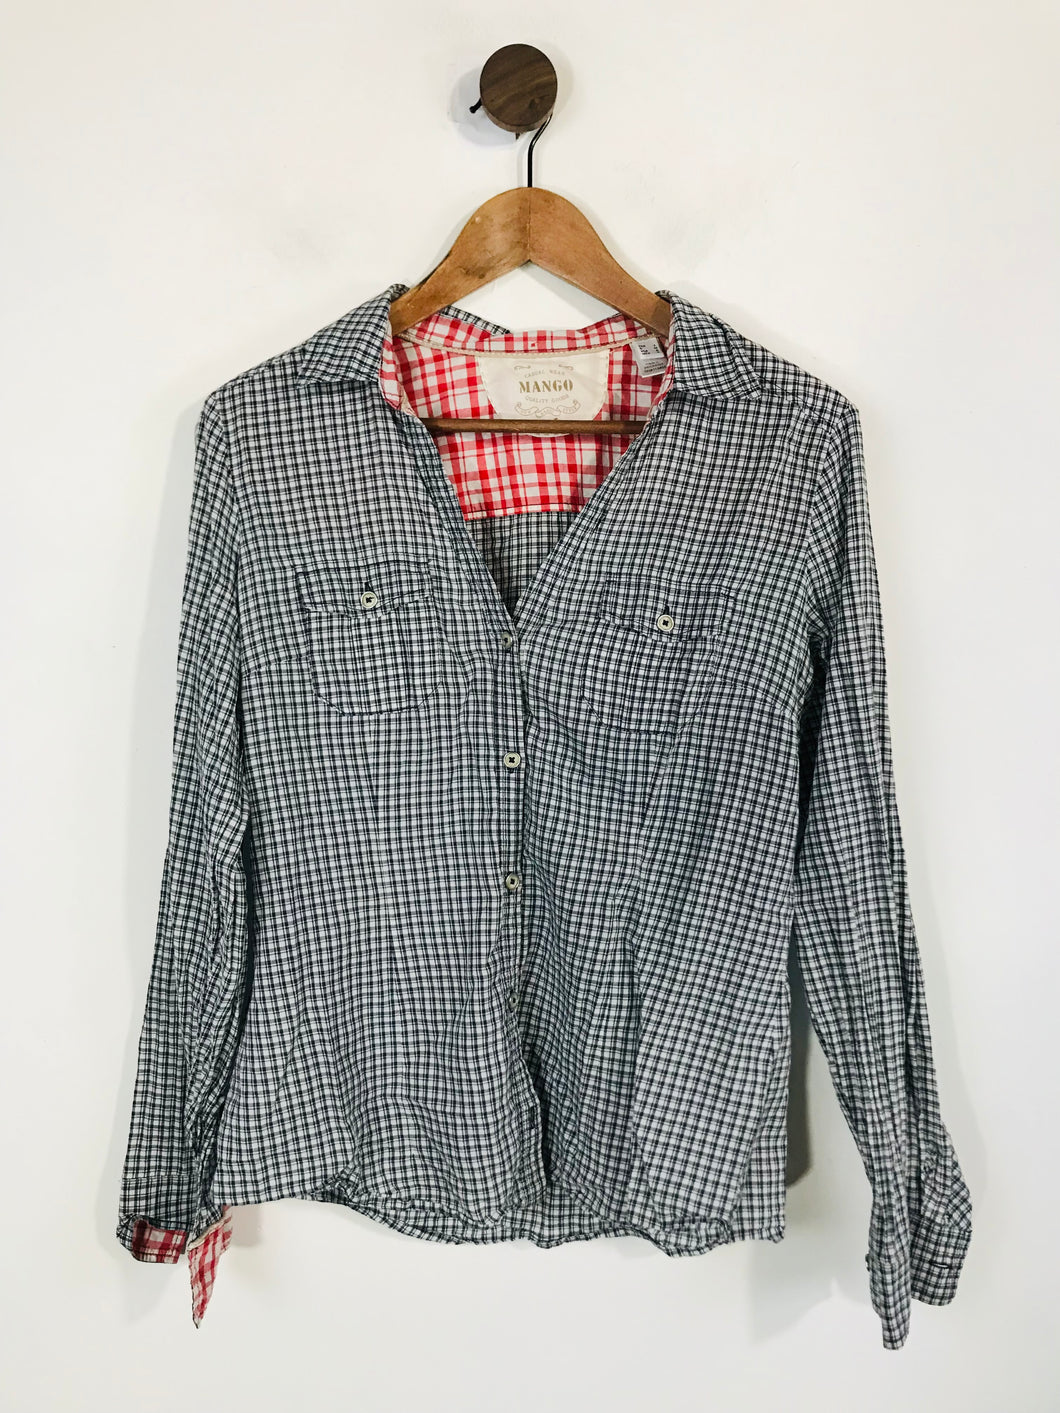 Mango Women's Cotton Check Gingham Button-Up Shirt | L UK14 | Black